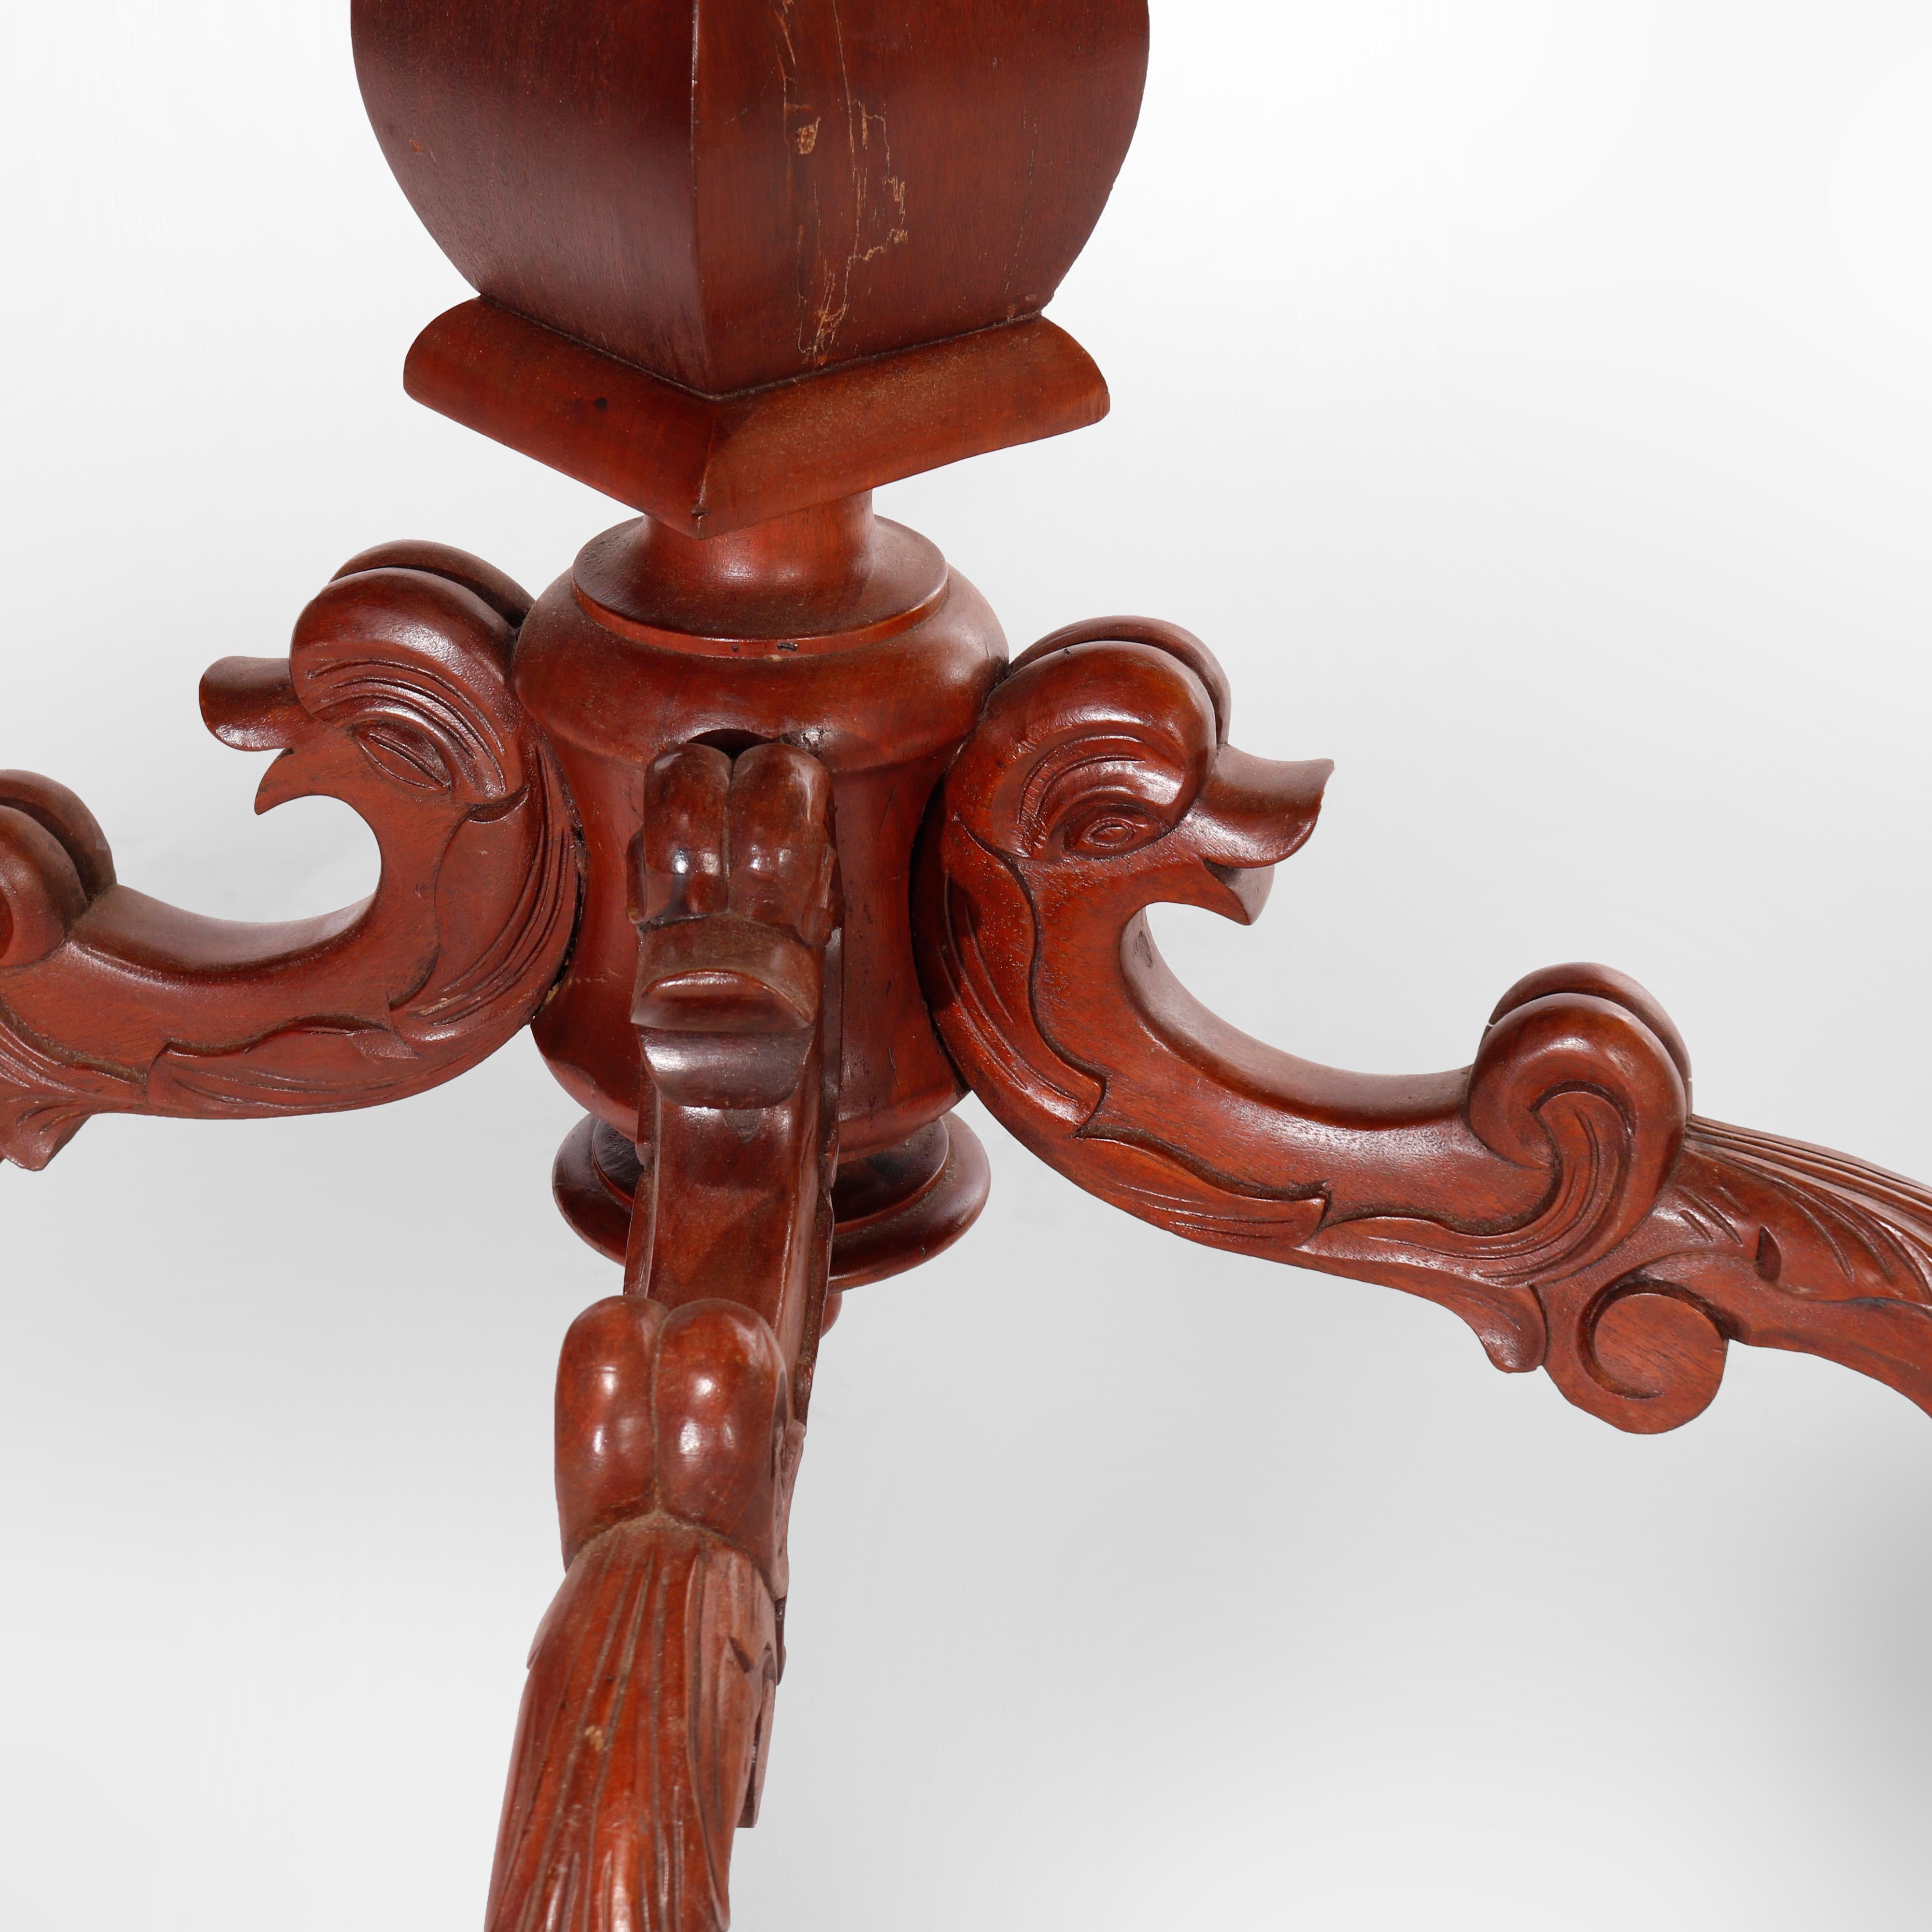 Antique Renaissance Revival Figural Carved Oval Marble Top Parlor Table, c1880 For Sale 5